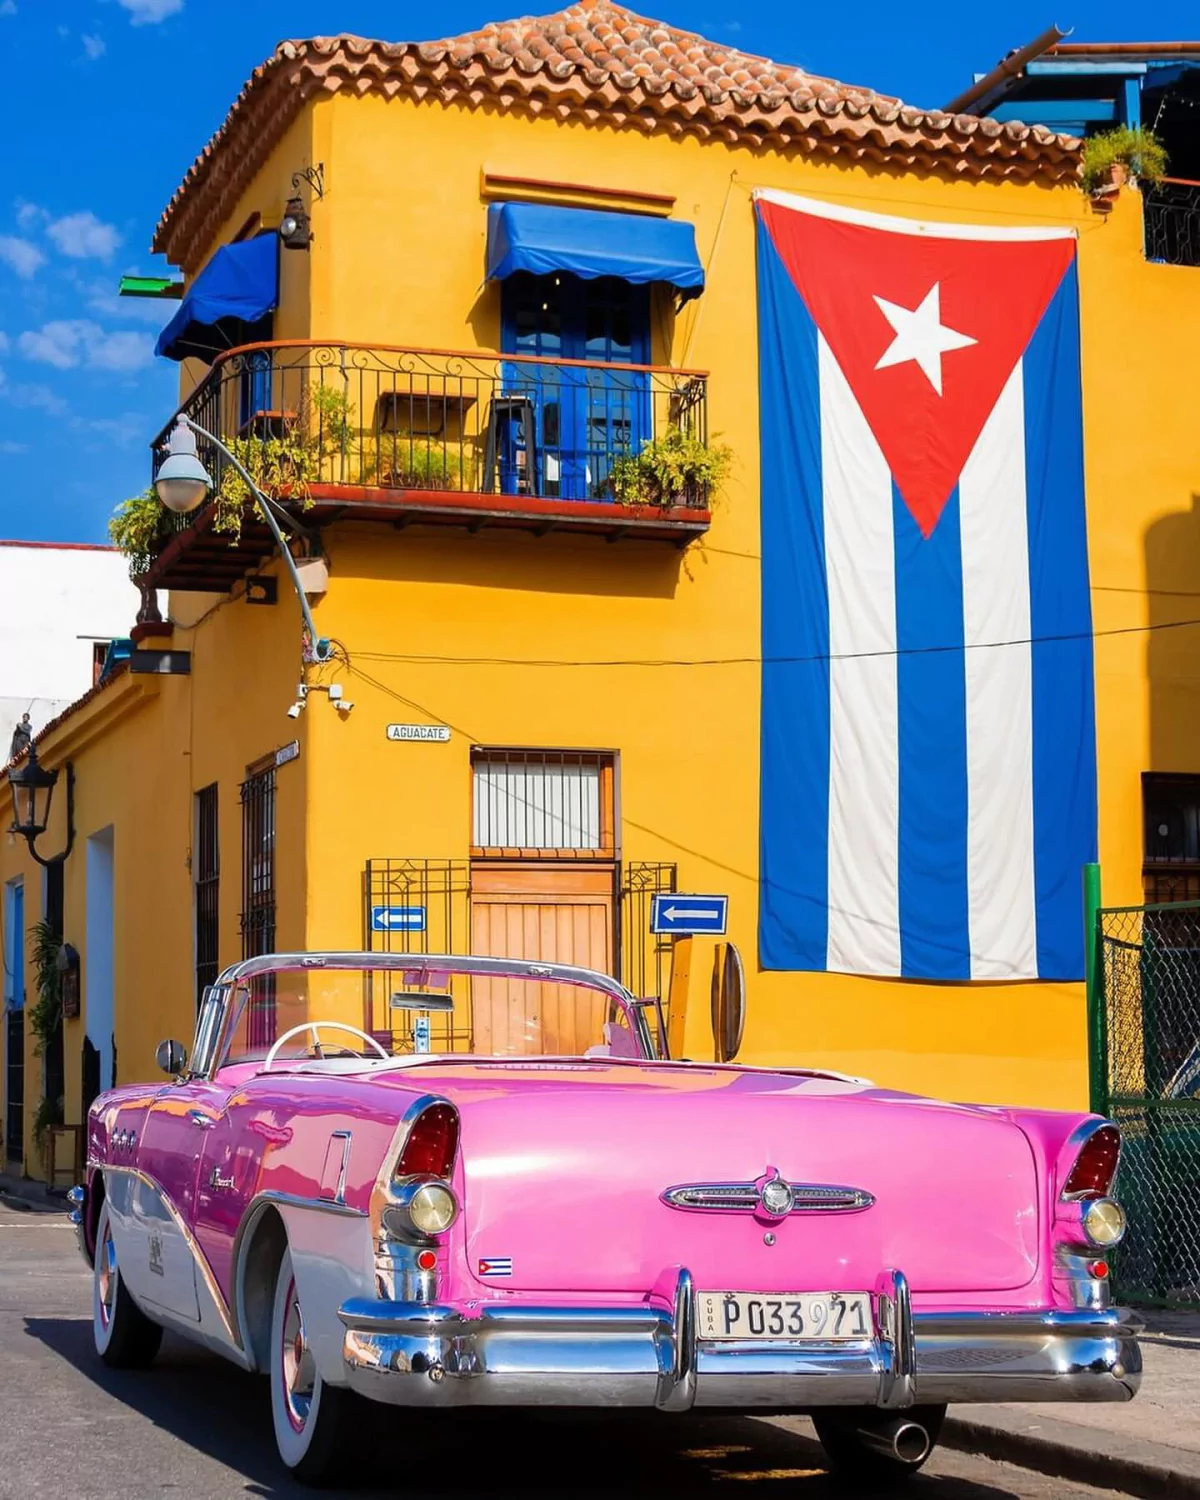 Vibrant Culture in Cuba